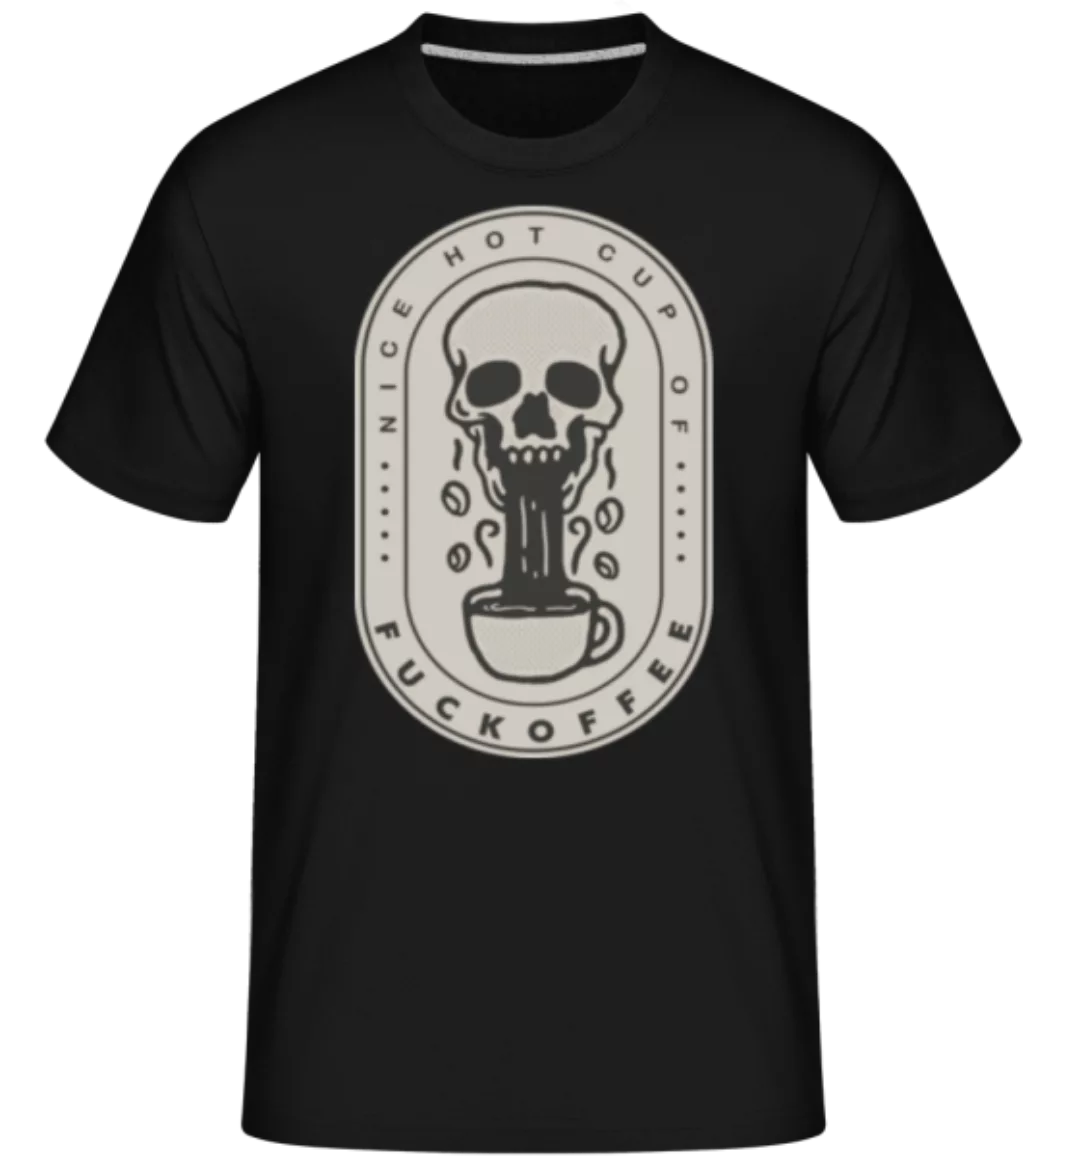 Hot Cup Of Fckoffee · Shirtinator Männer T-Shirt günstig online kaufen